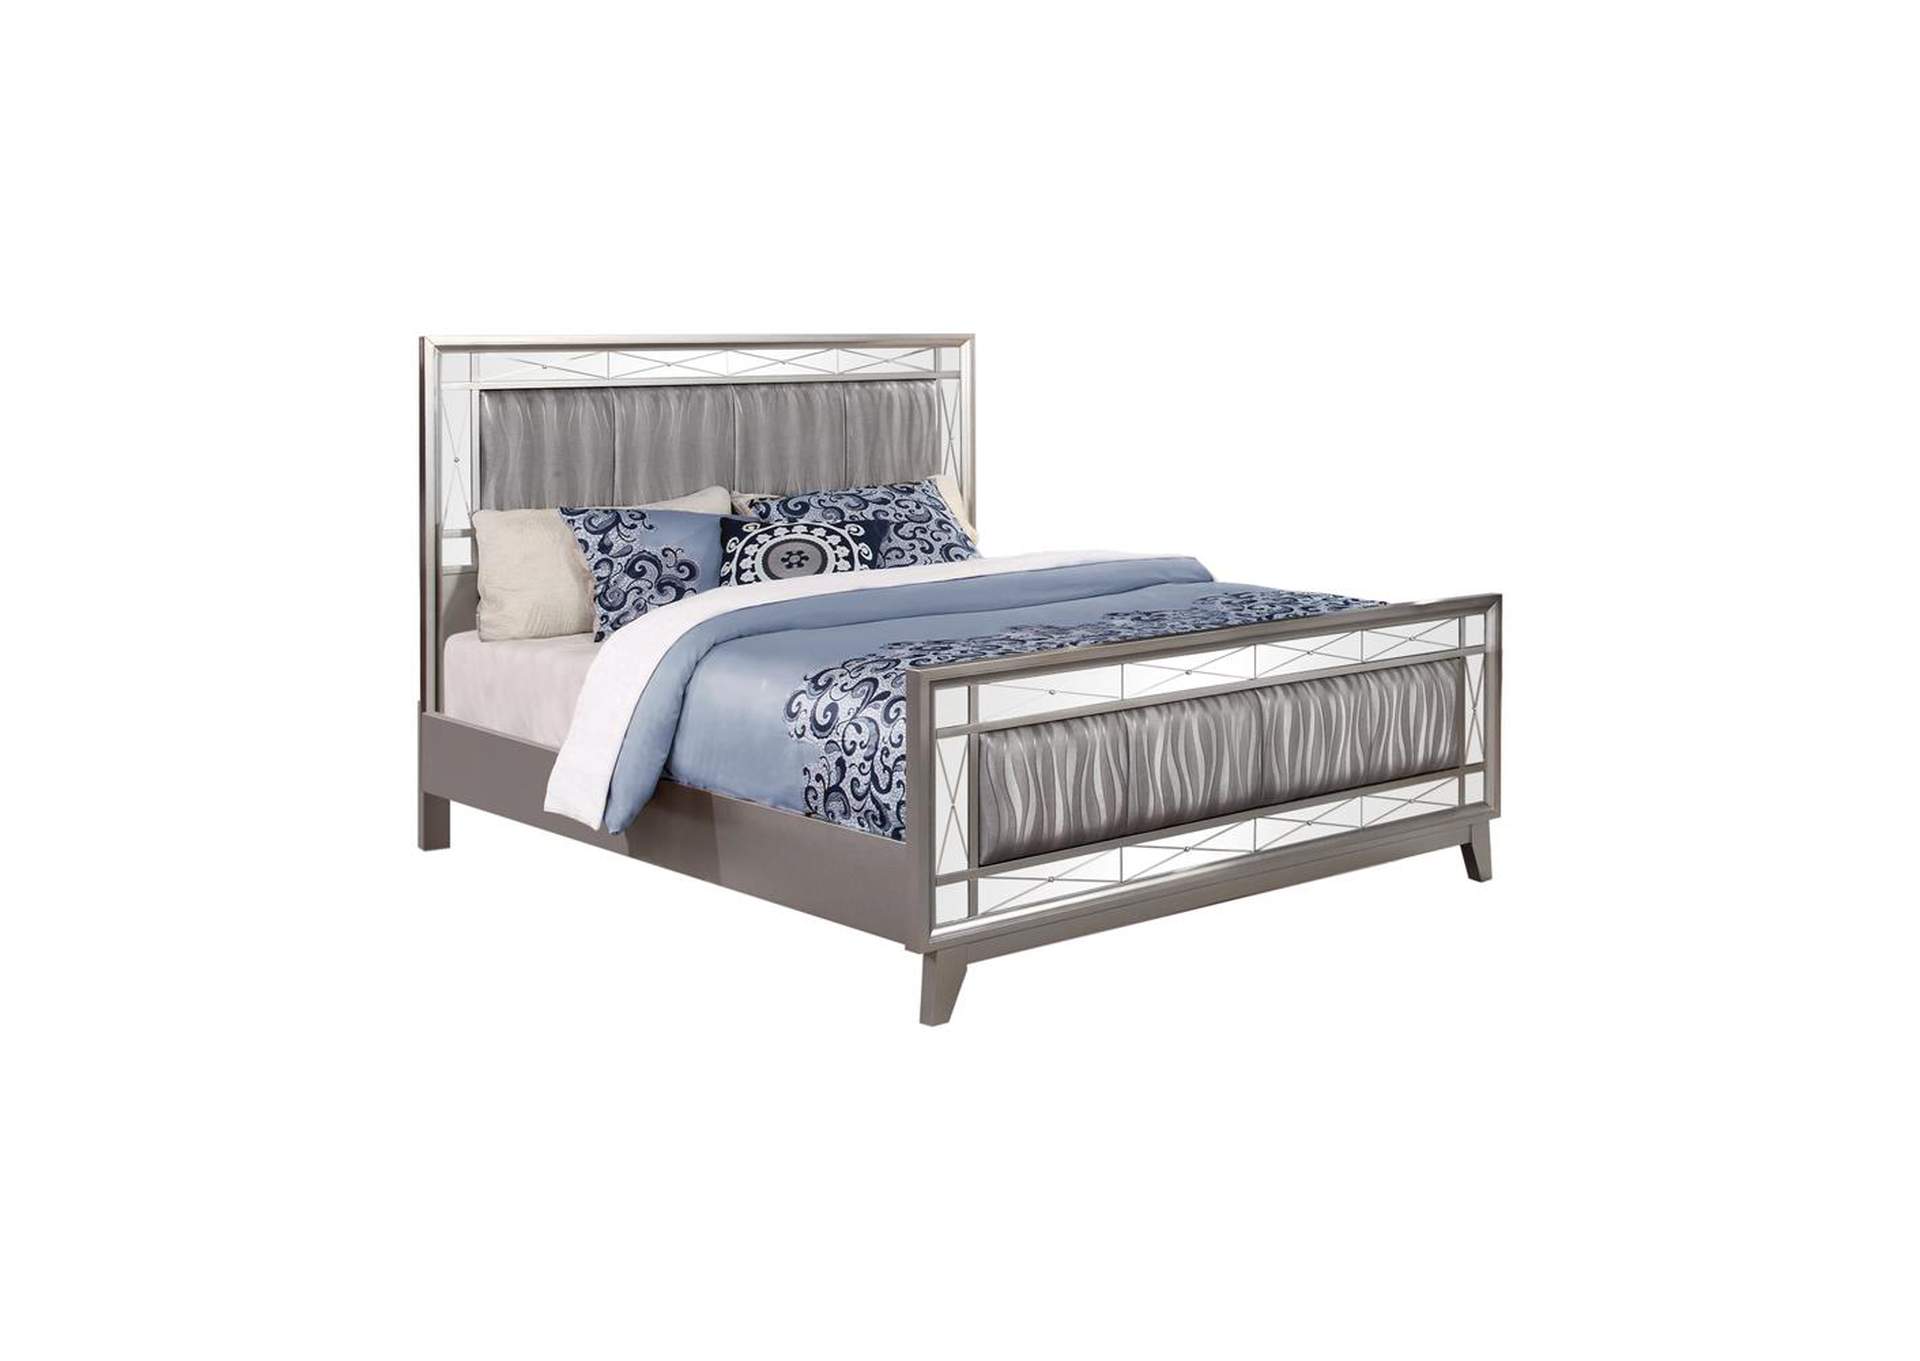 Leighton Contemporary Metallic Full Bed,Coaster Furniture